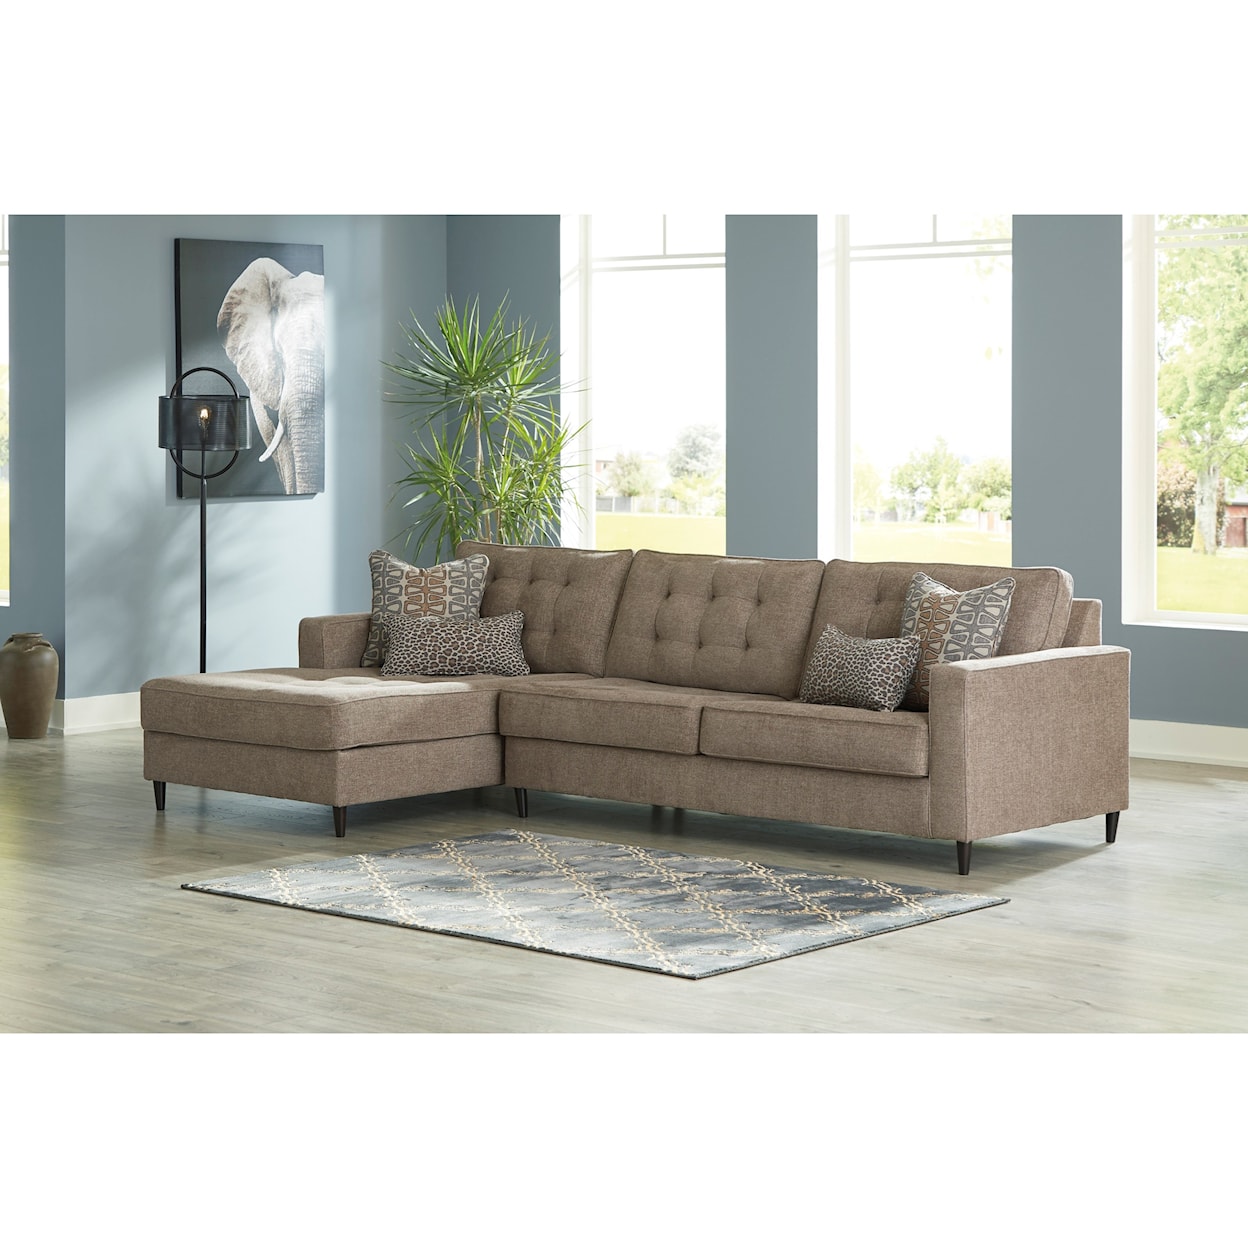 Ashley Furniture Signature Design Flintshire 3 Seat Sectional Sofa